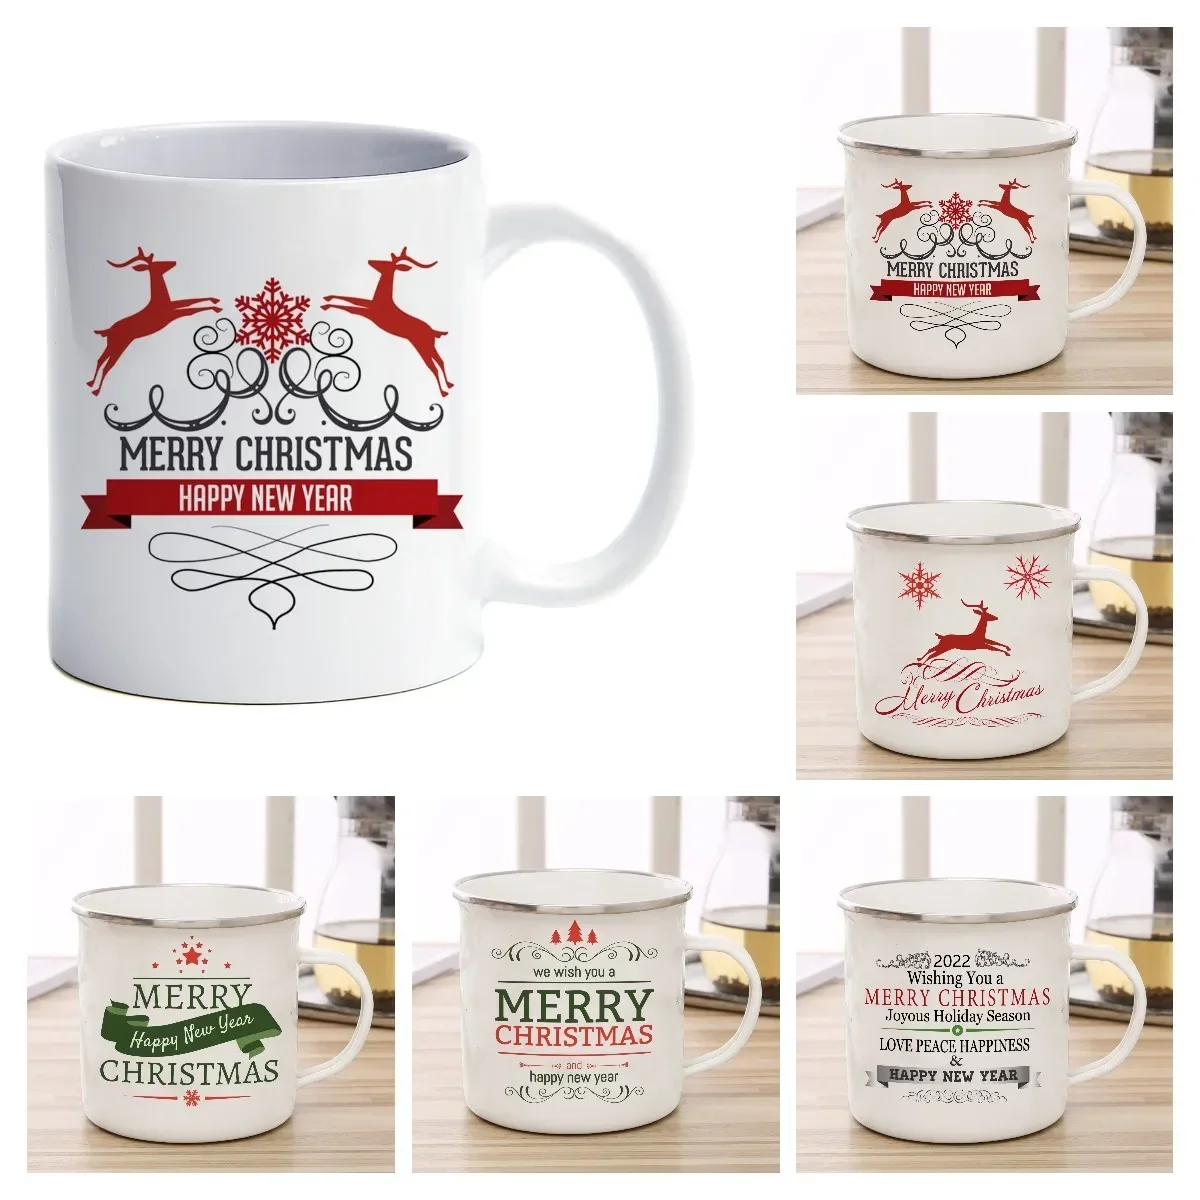 

Merry Christmas Enamel Coffee Mugs Christmas Gifts New Year Party Wine Beer mug Juice Drink Tea Cups Mug Home Kitchen Drinkware